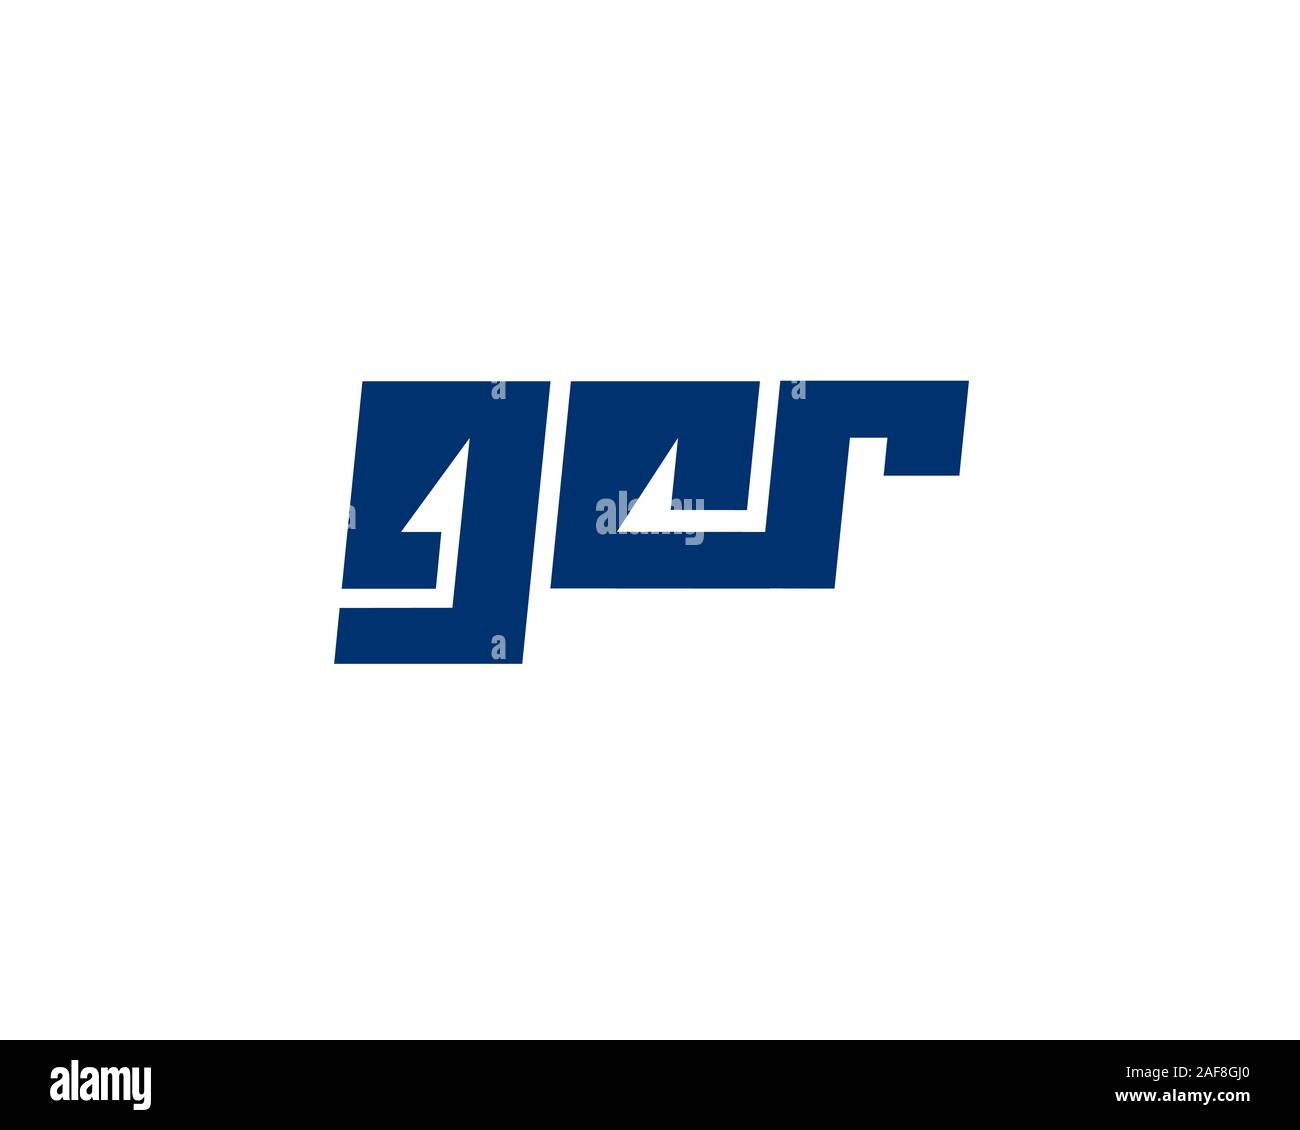 g c r typography Stock Vector